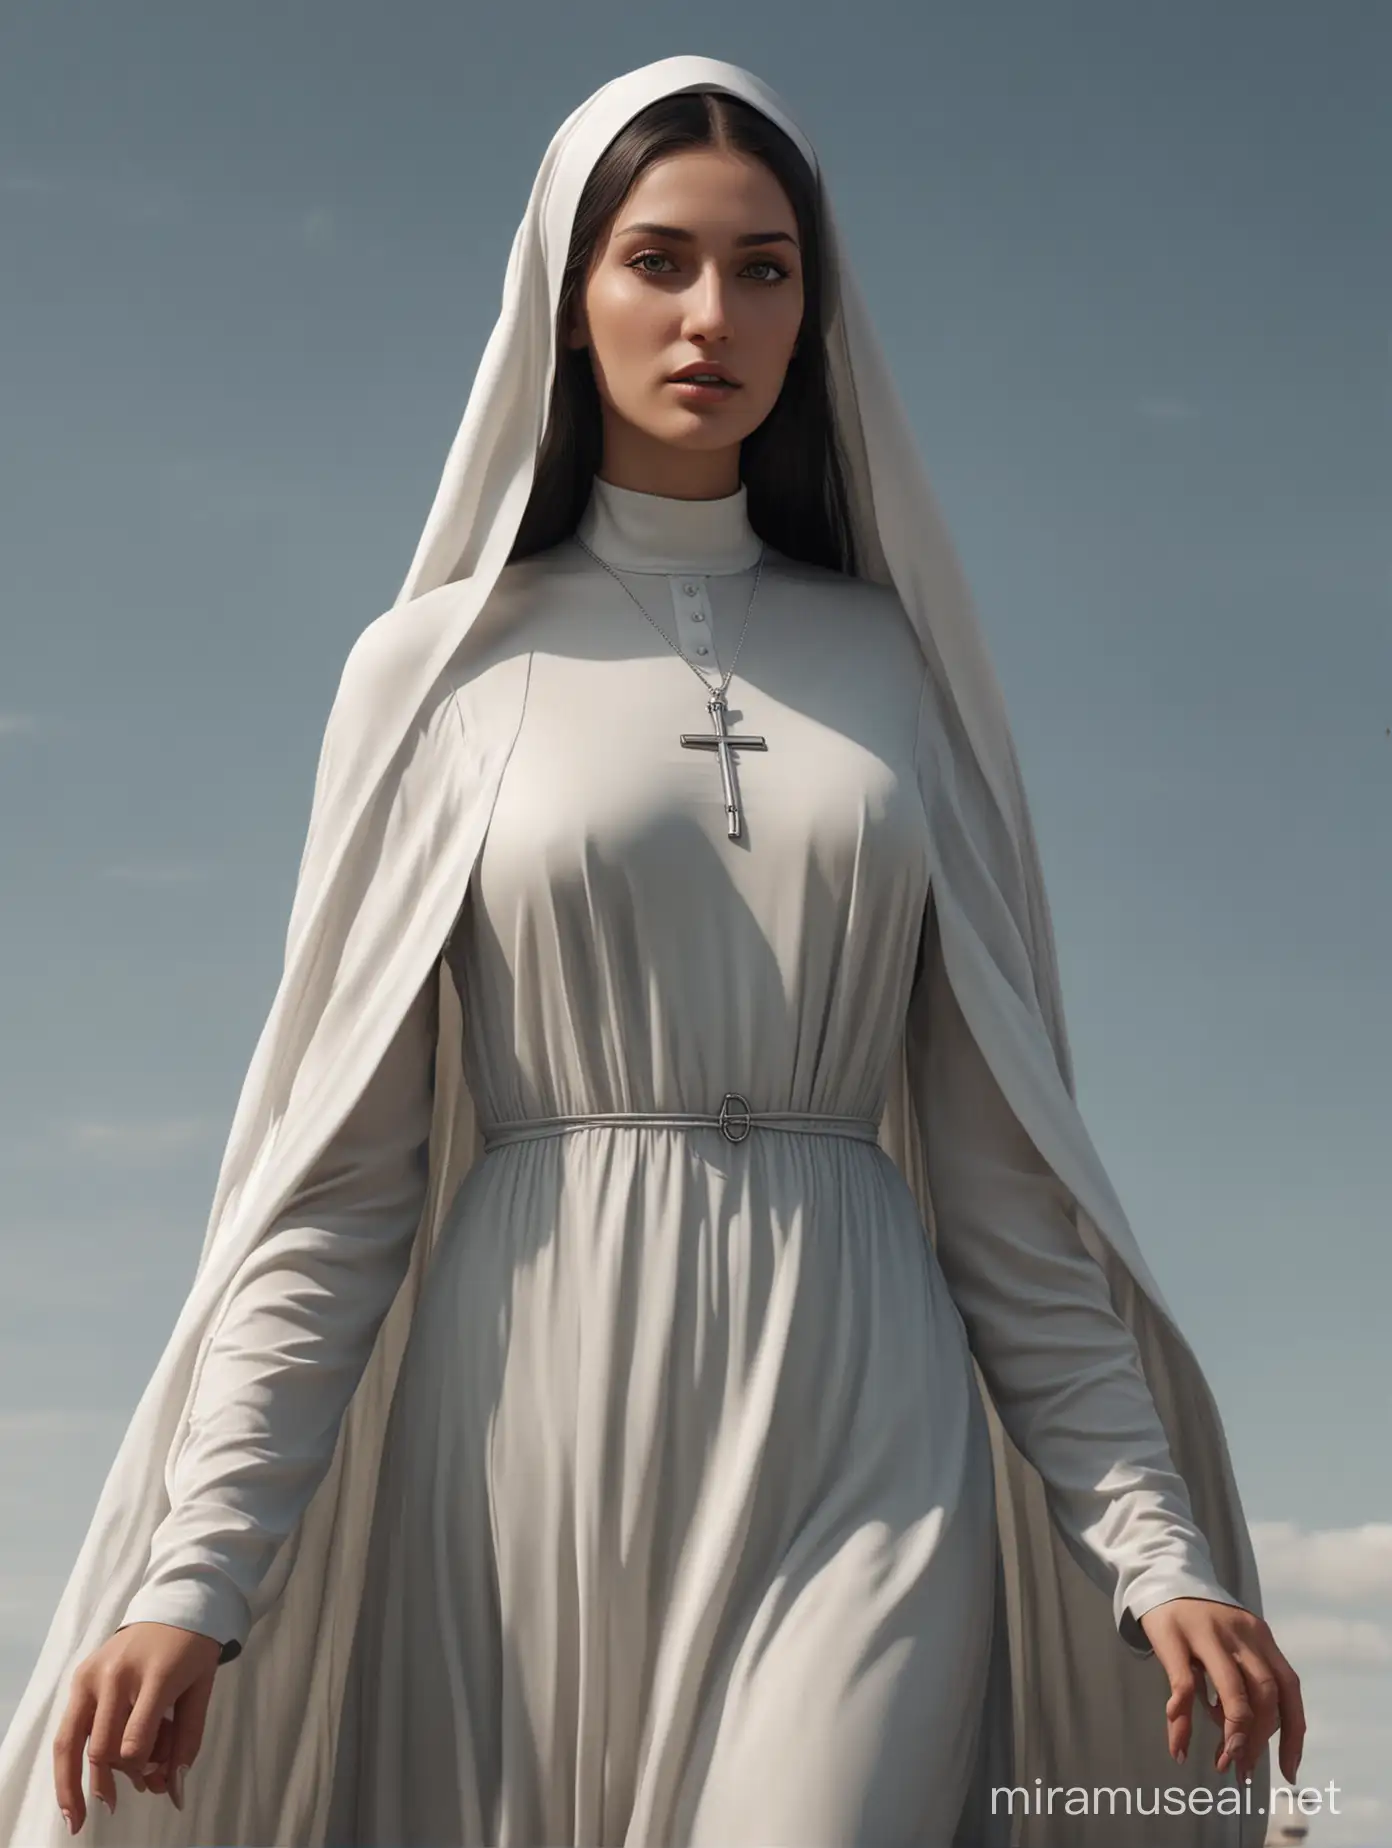 Seductive Nun in Silk Dress with Billowing Veil Realistic 8K Image